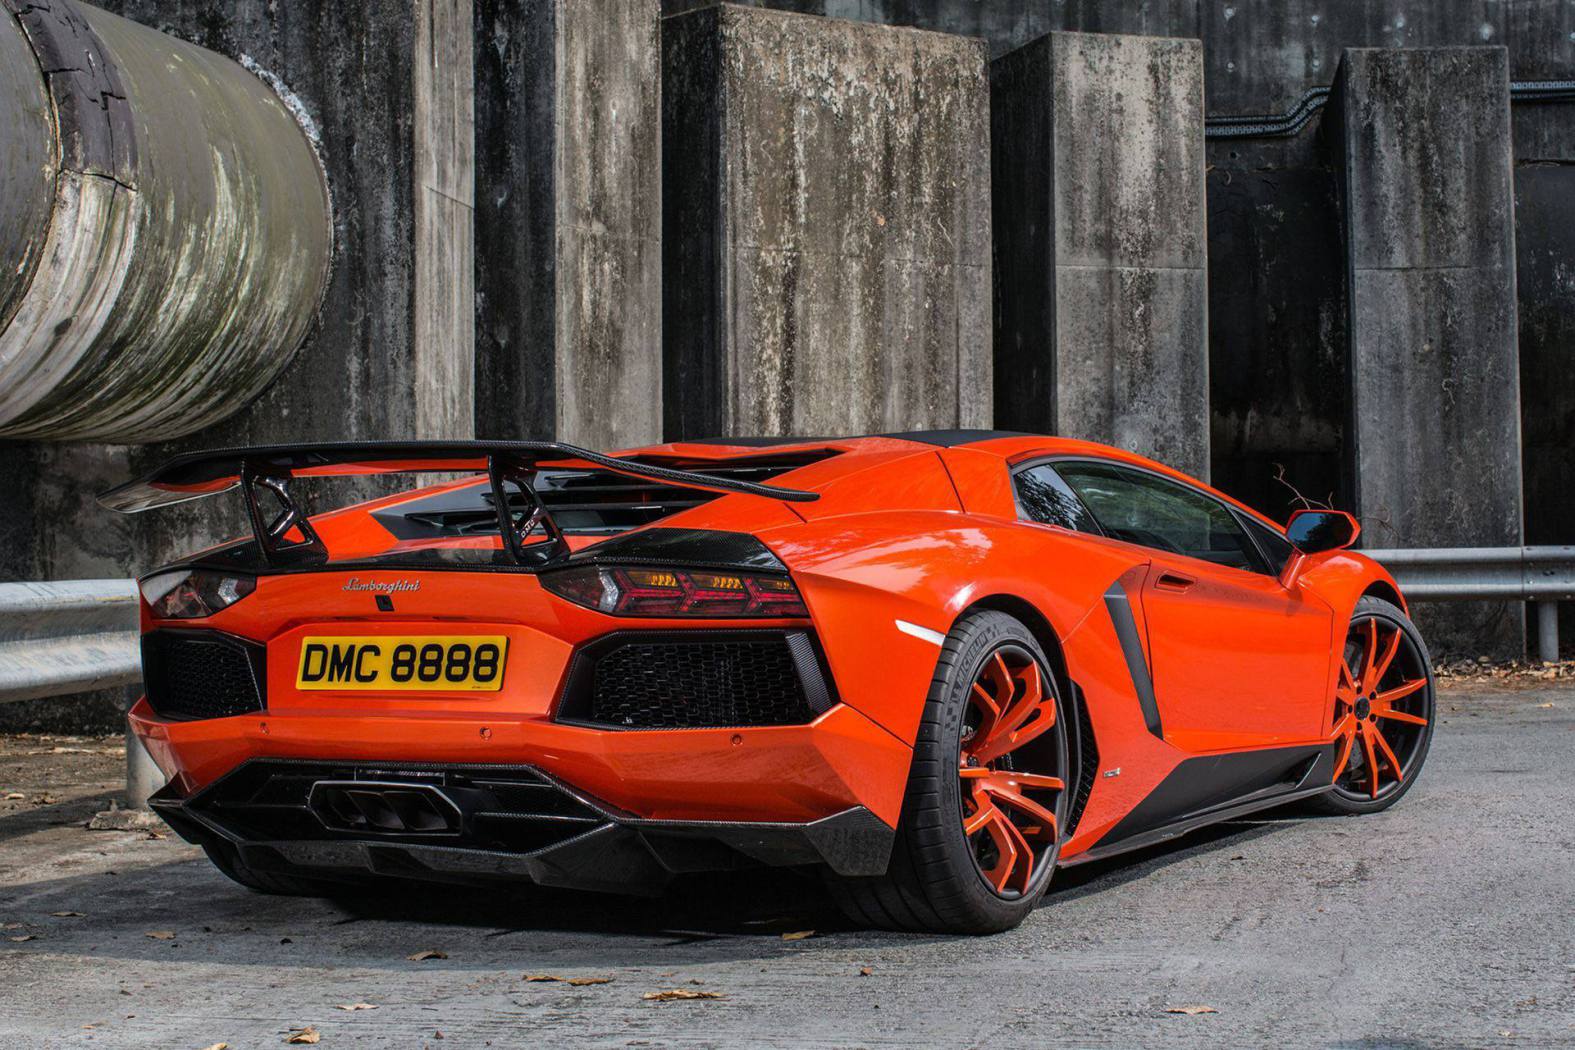 Lamborghini-Aventador-DMC-body-kit-tuning-empire (6)